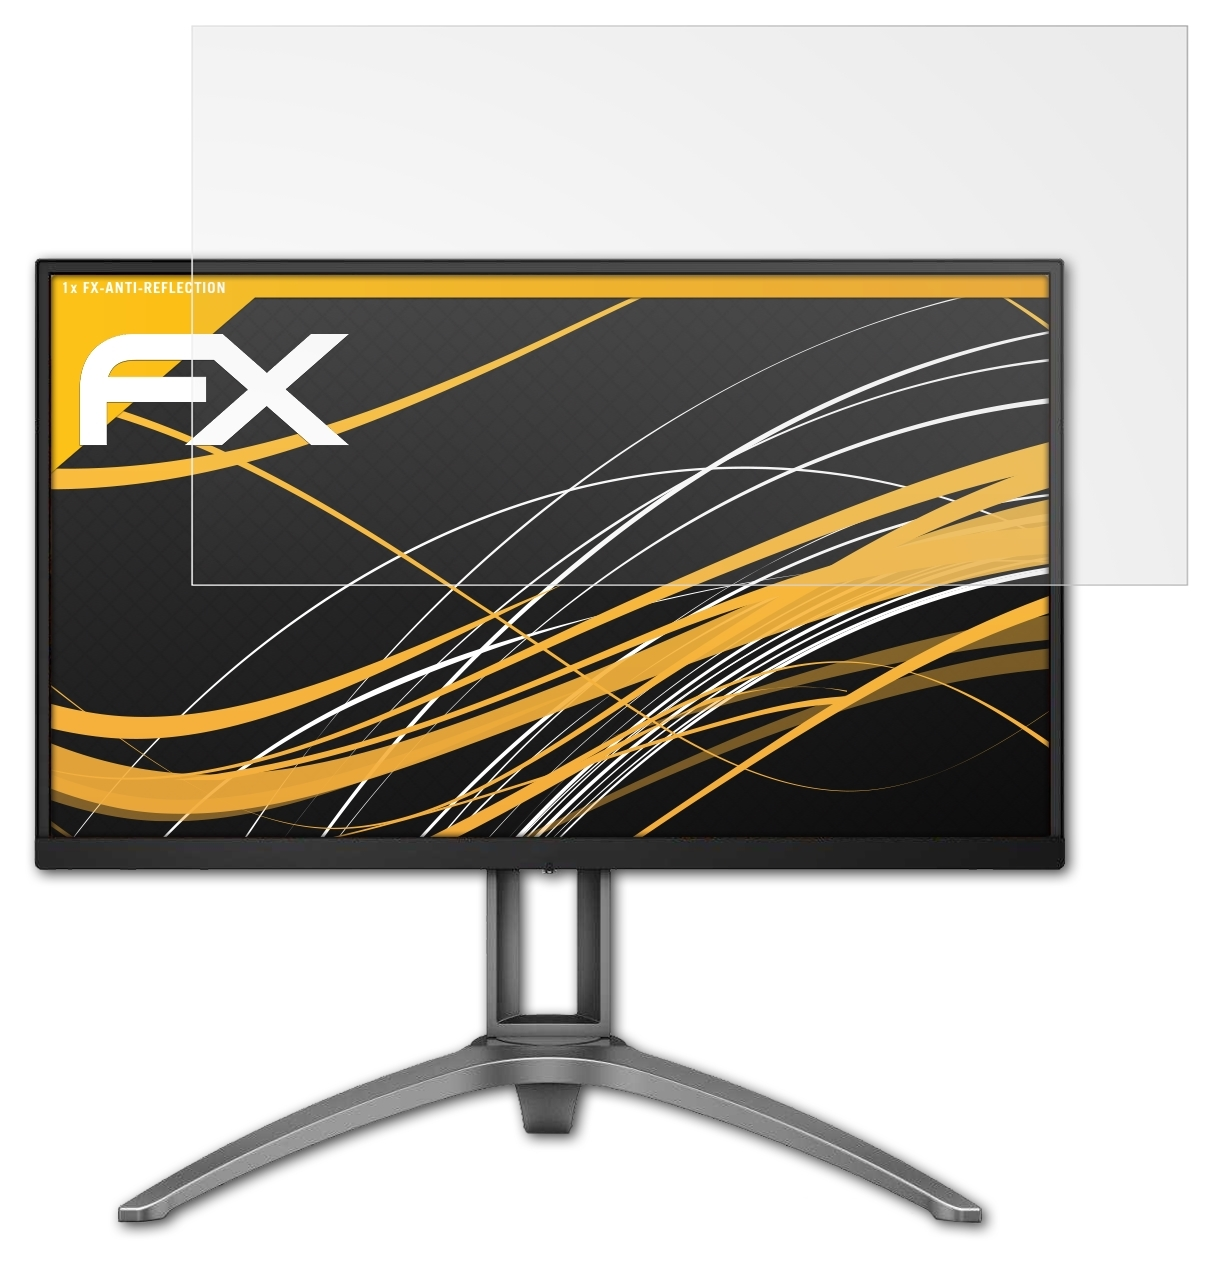 ATFOLIX FX-Antireflex Displayschutz(für AOC AG273QXP)